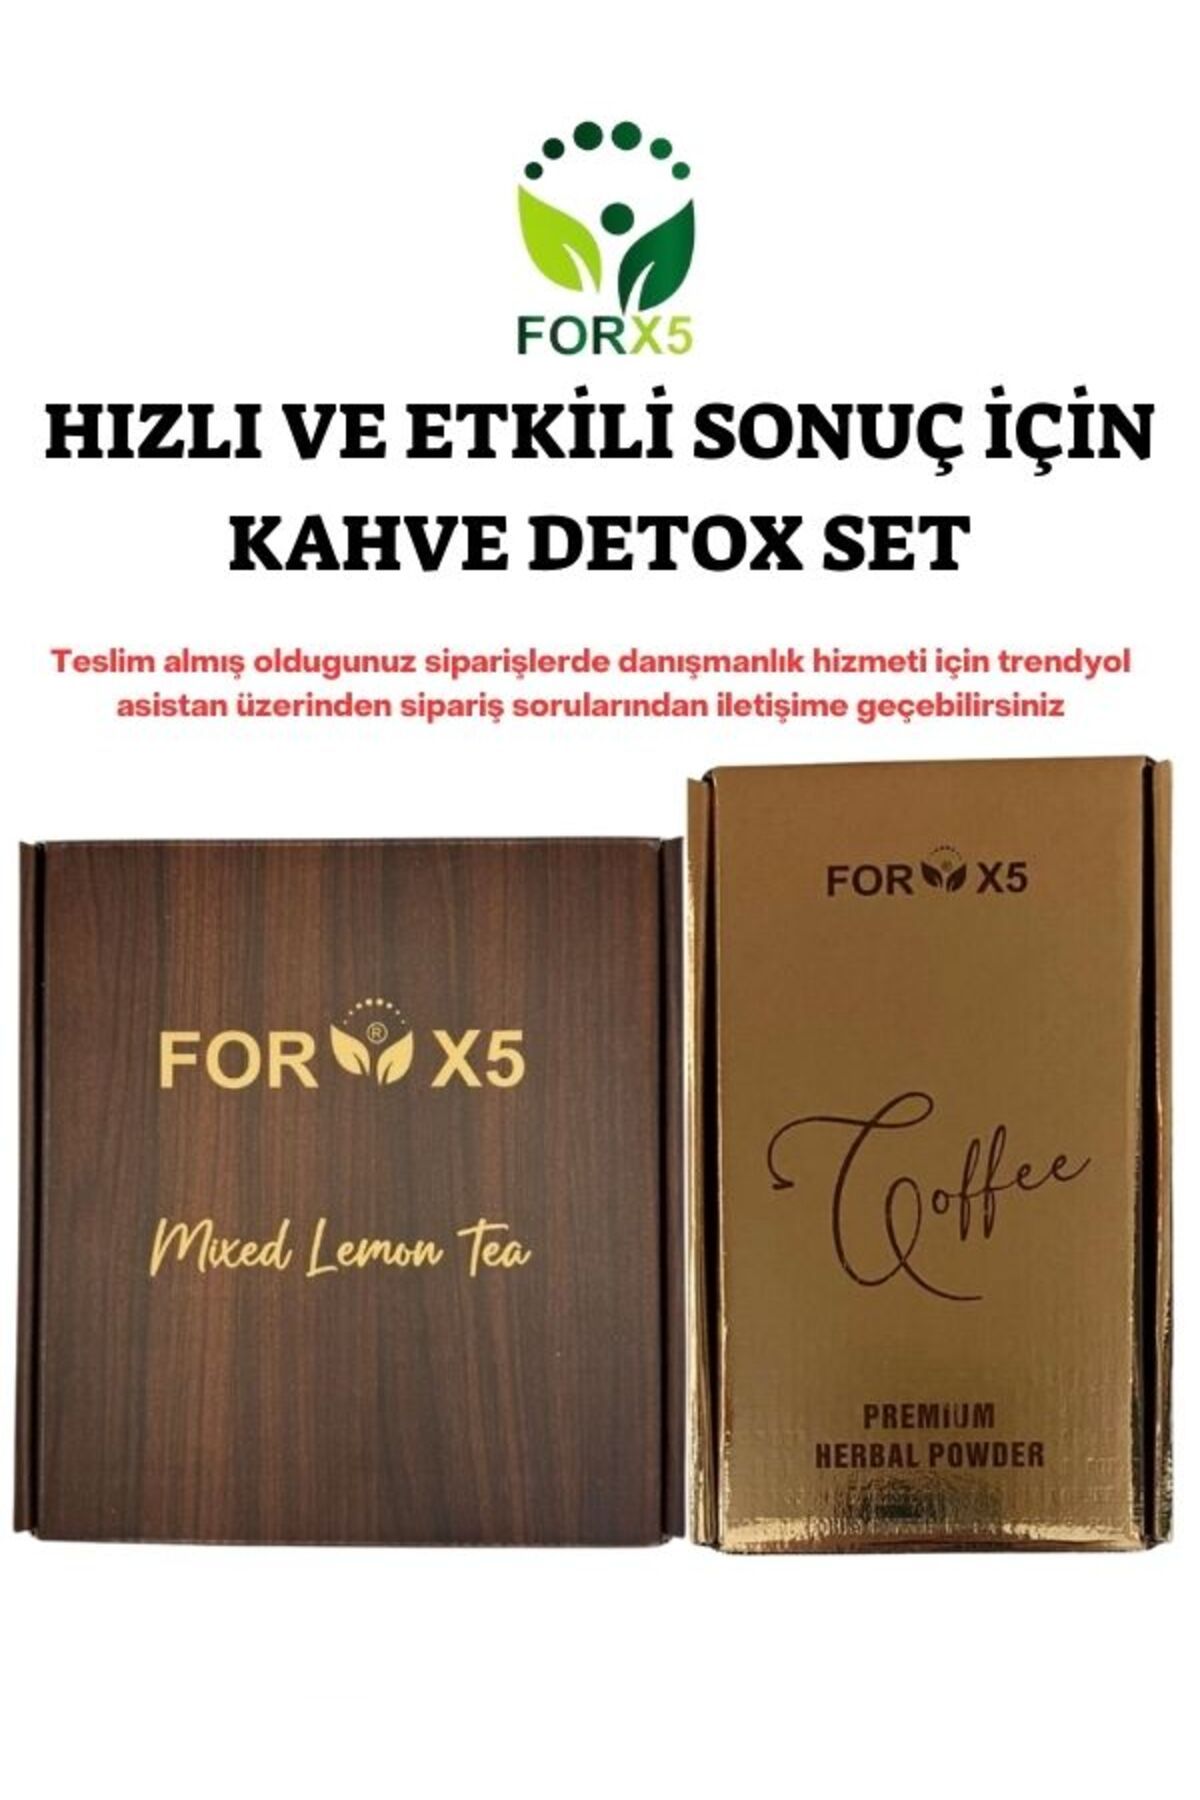 FORX5 COFFEE & FORX5 DETOX SET